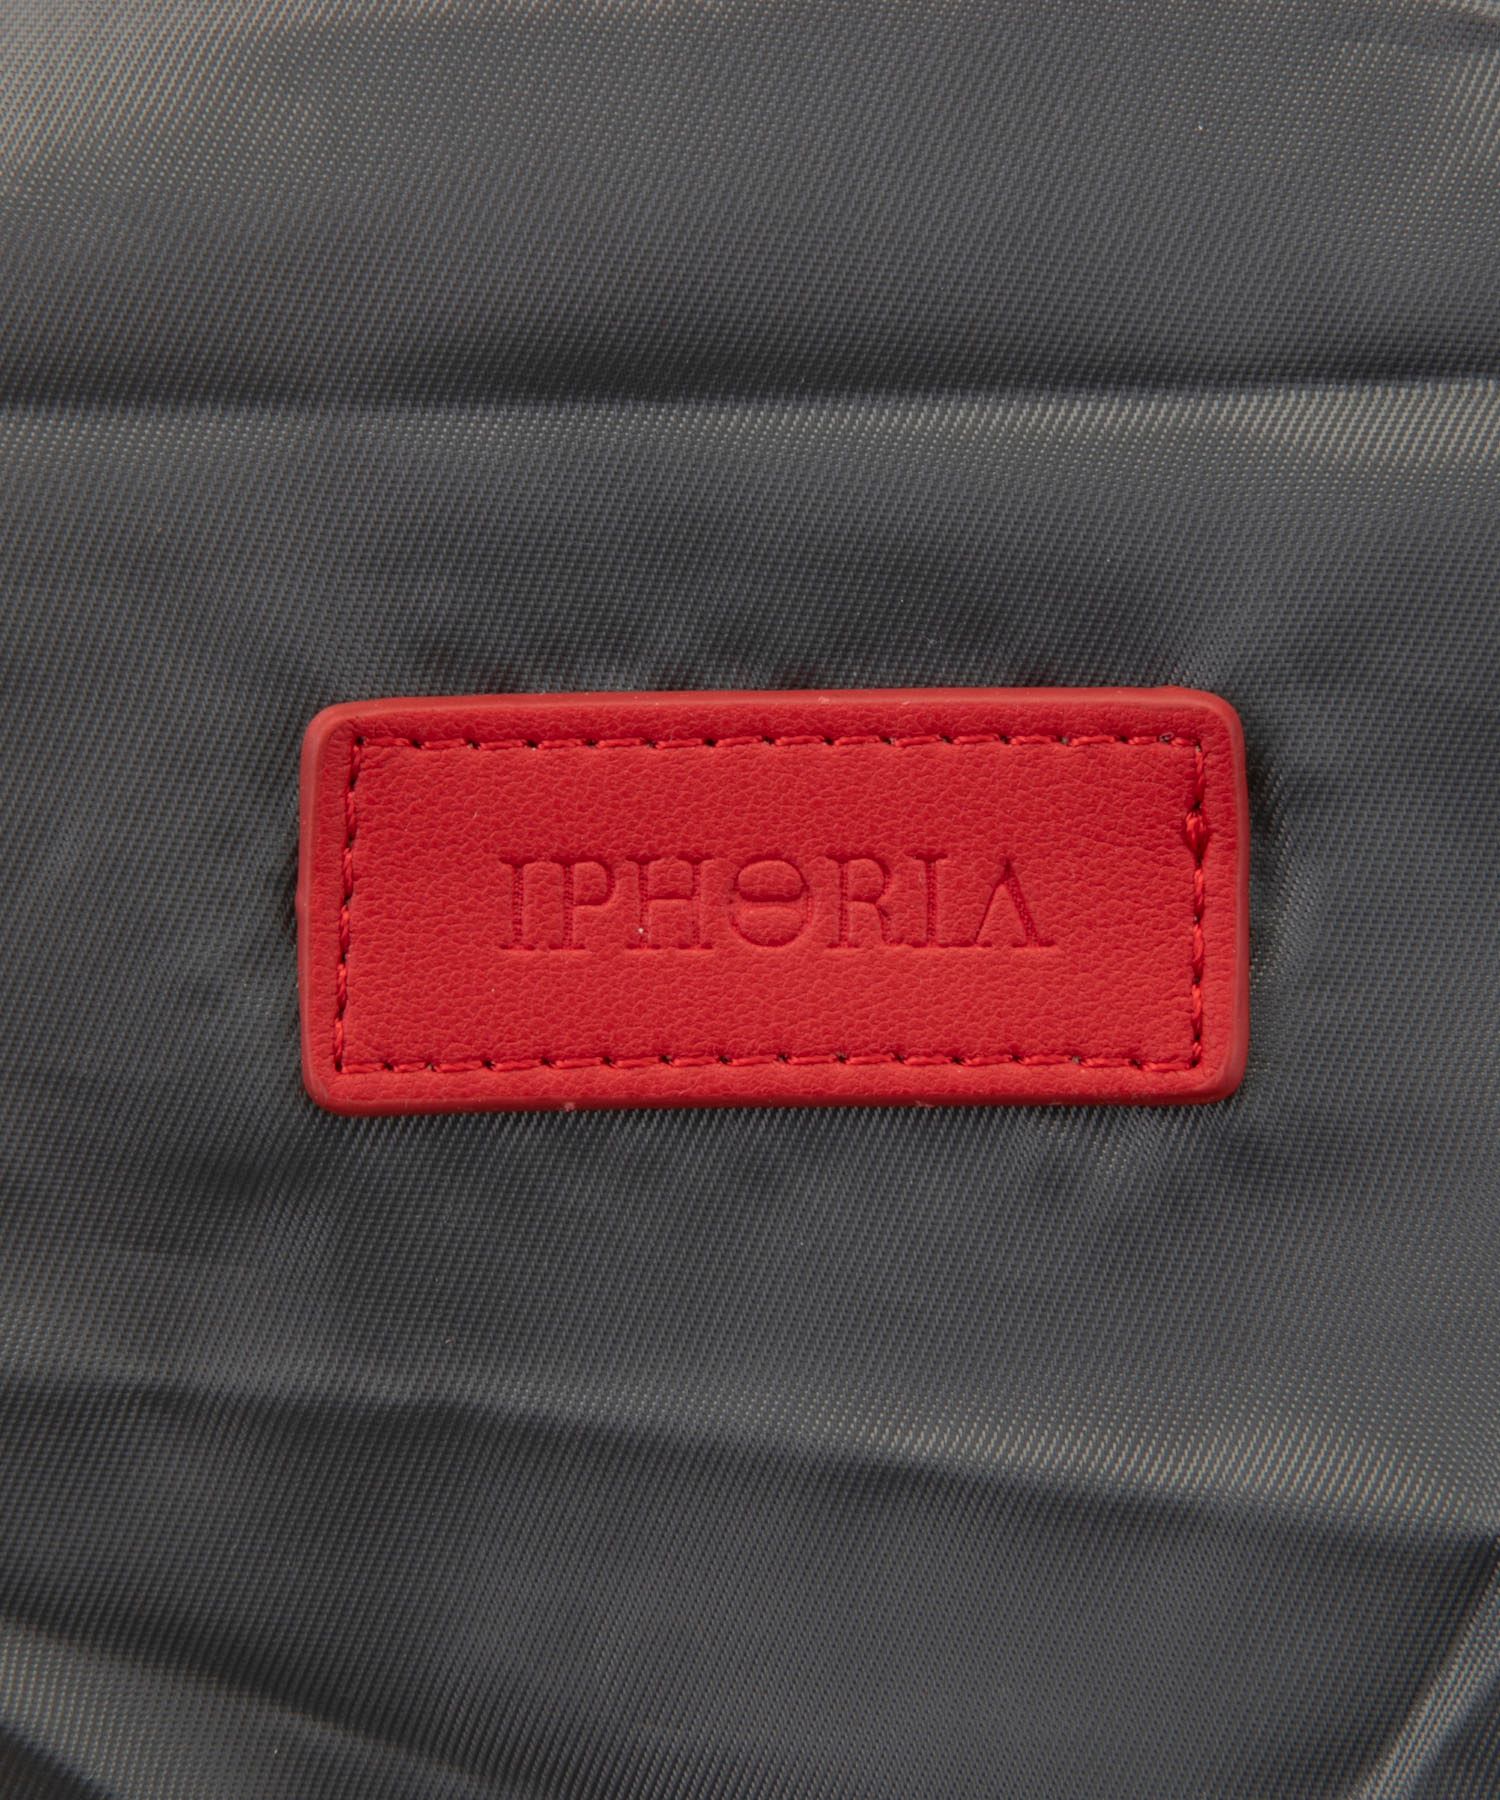 IPHORIA - Washbag - Red Linen With Lips | IPHORIA